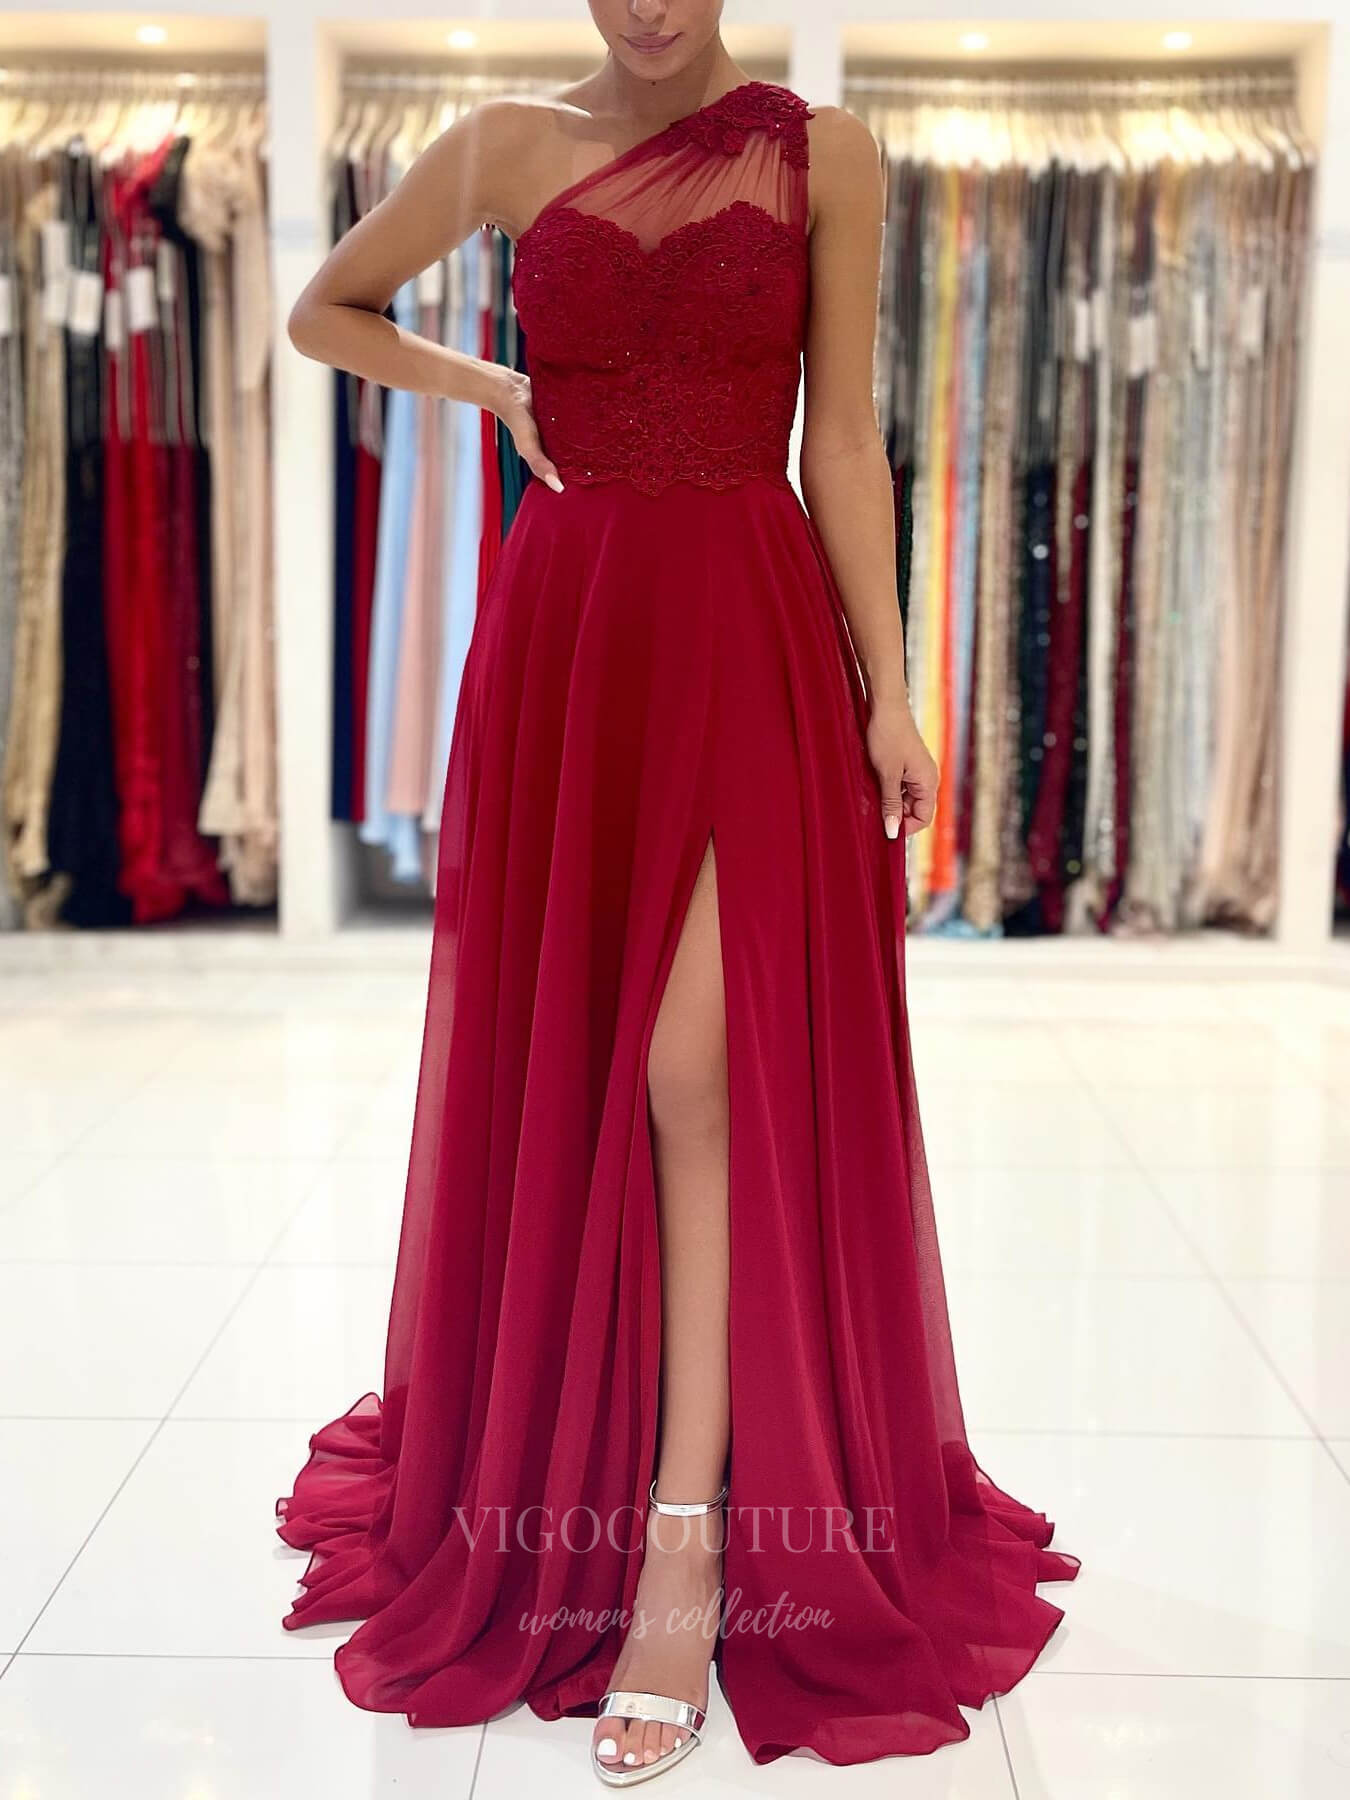 vigocouture-One Shoulder Chiffon Prom Dress 20831-Prom Dresses-vigocouture-Red-US2-